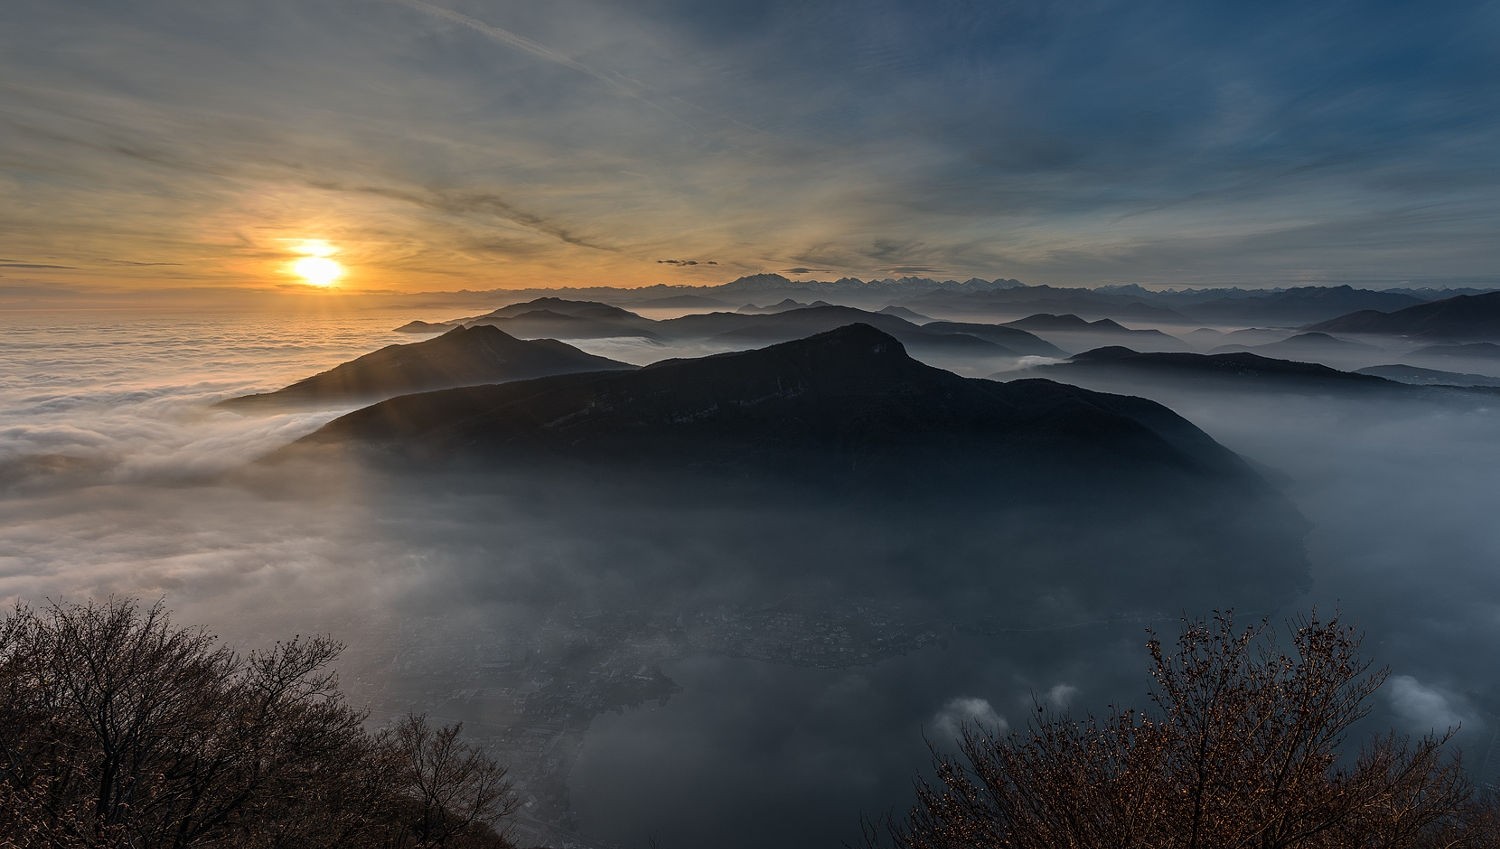 General 1500x849 landscape photography nature mountains sunset mist sky sun rays shrubs city Swiss Alps sunlight